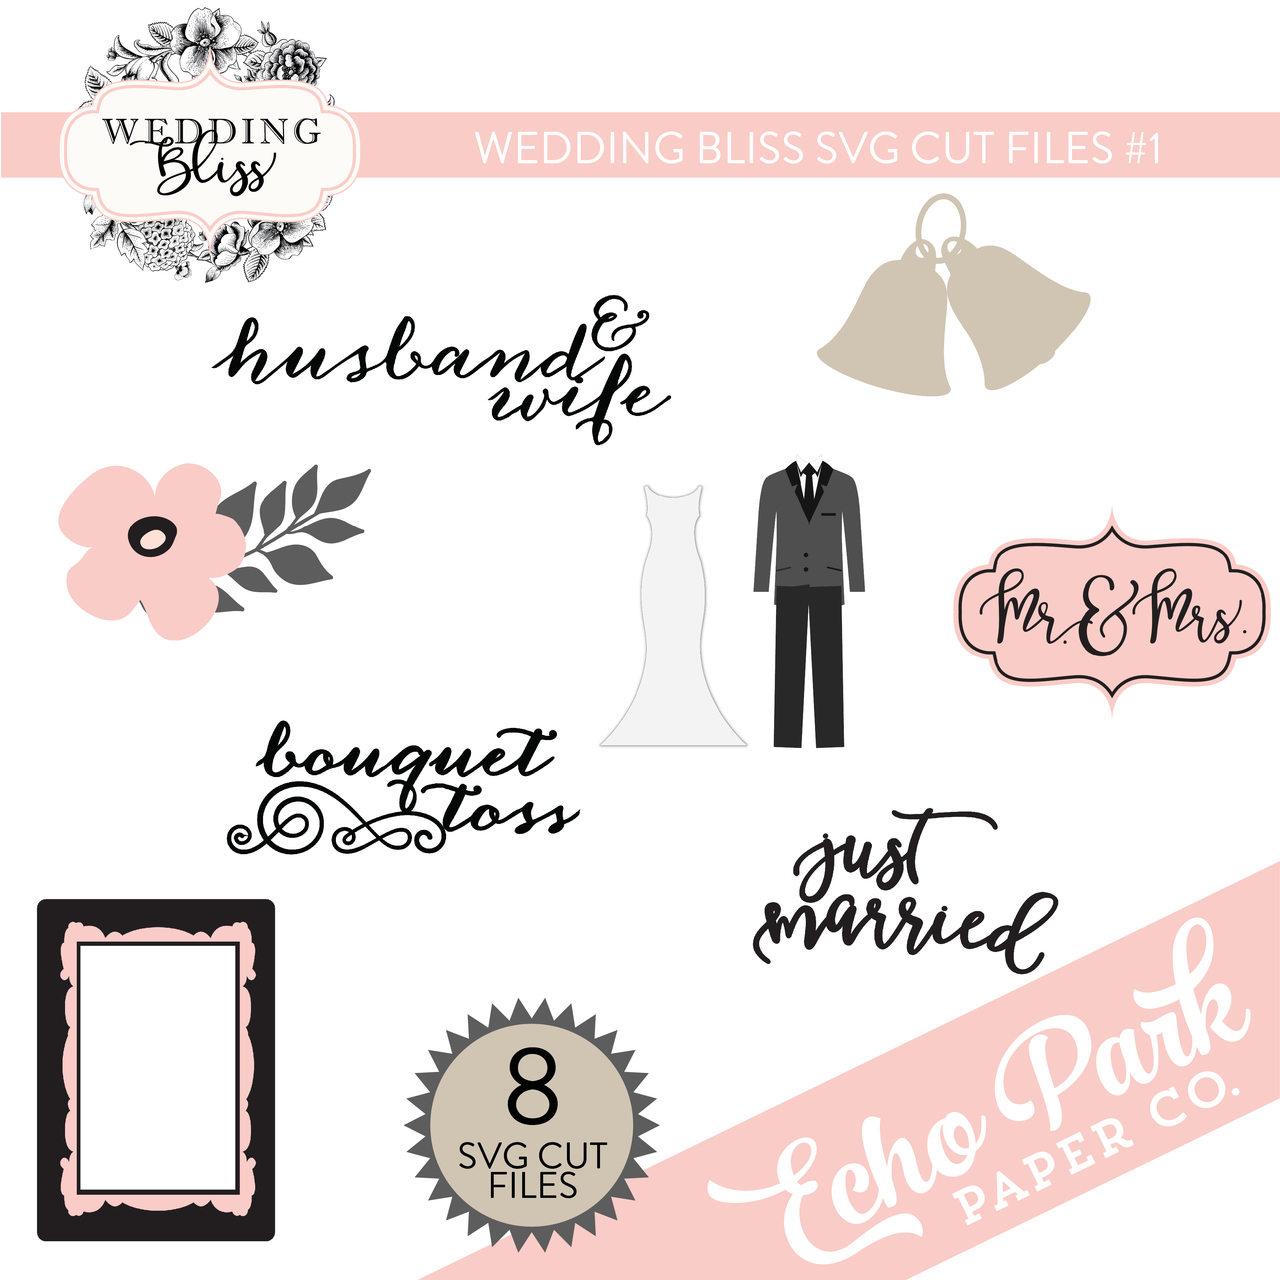 Wedding Bliss SVG Cut Files #1